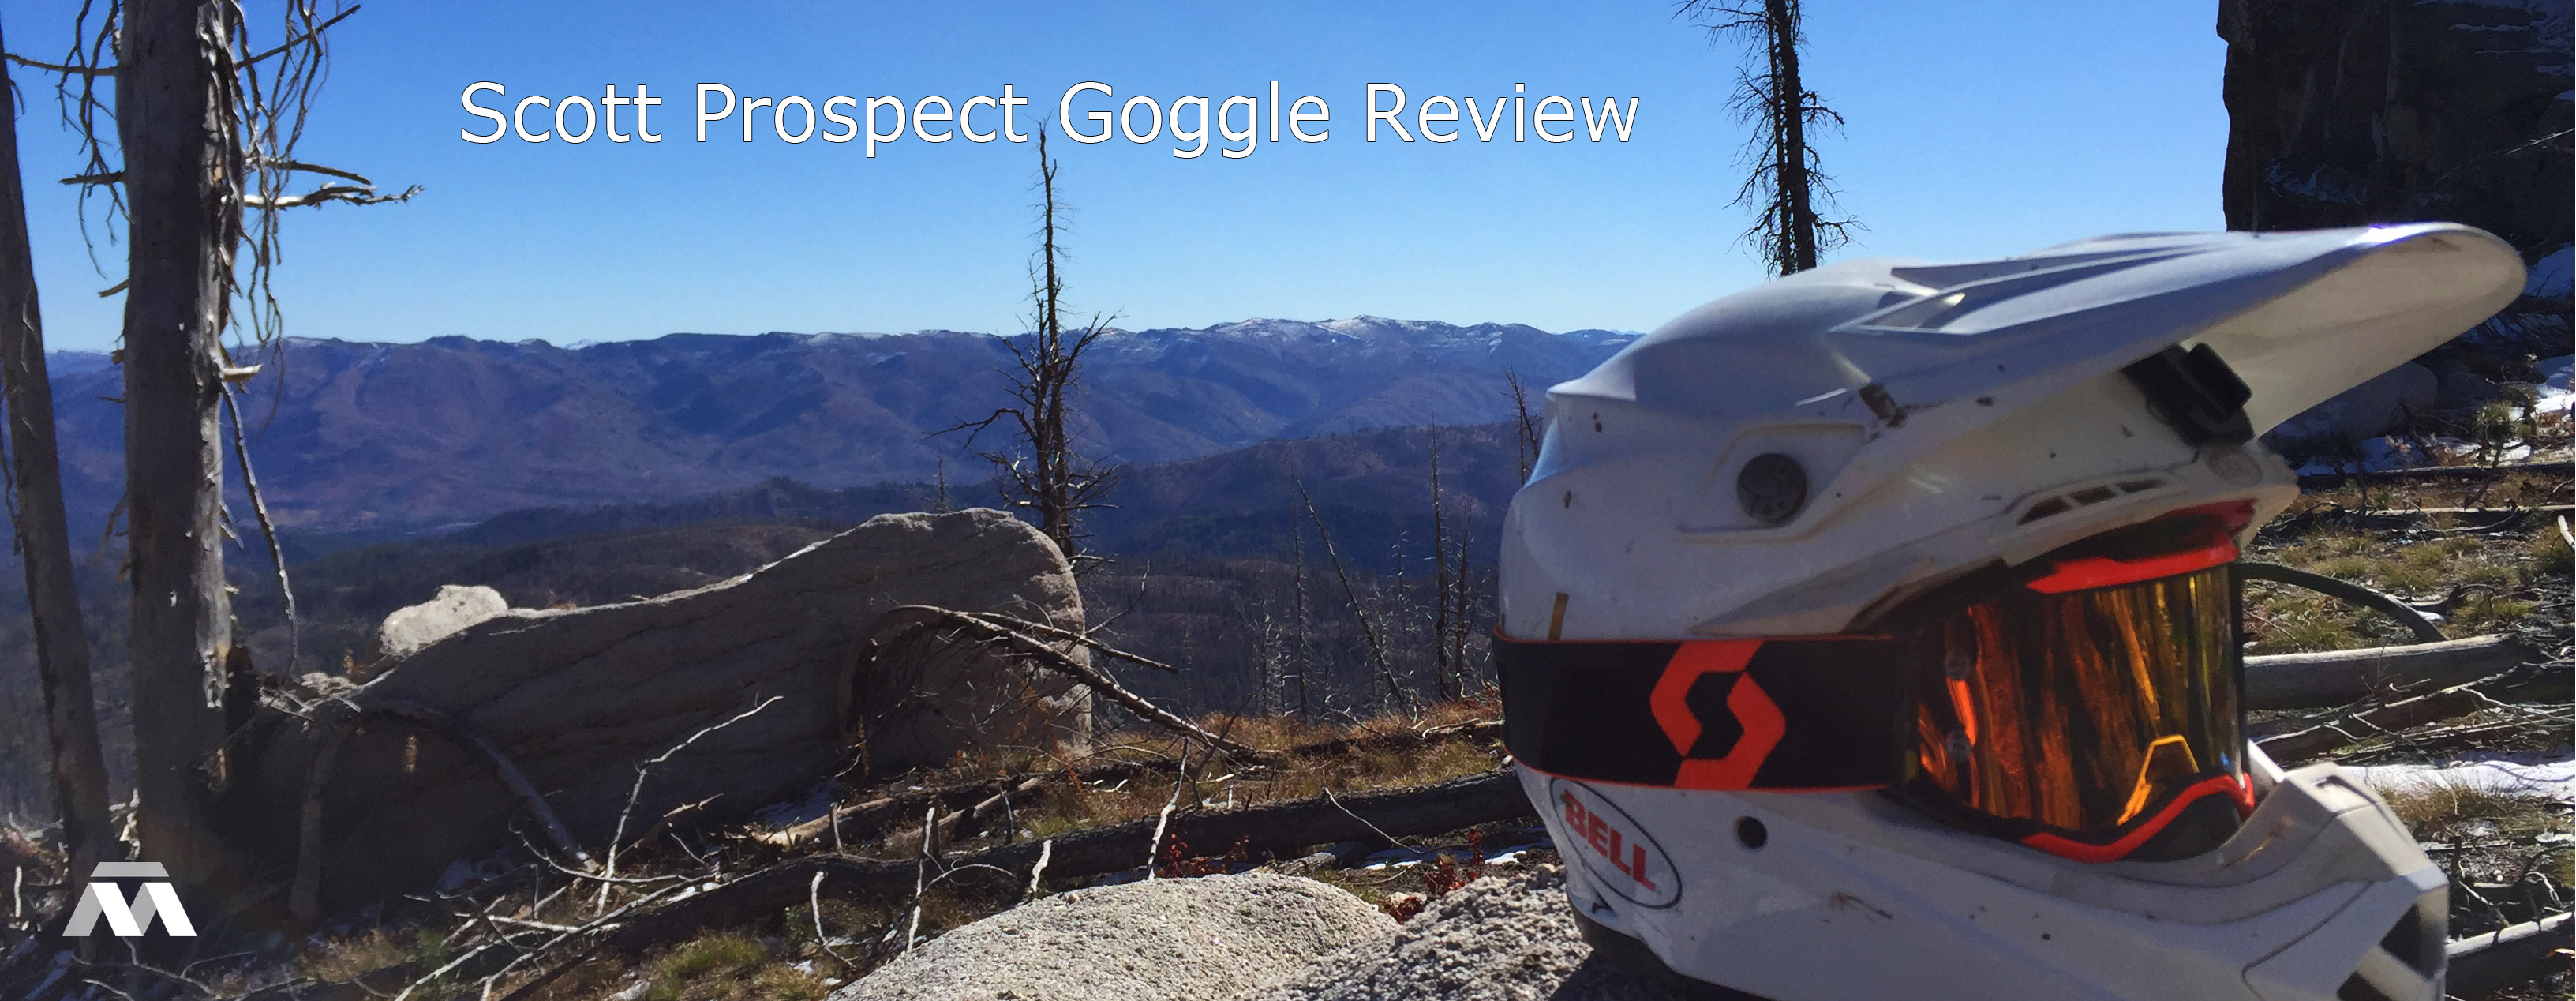 Scott Prospect Goggle Review